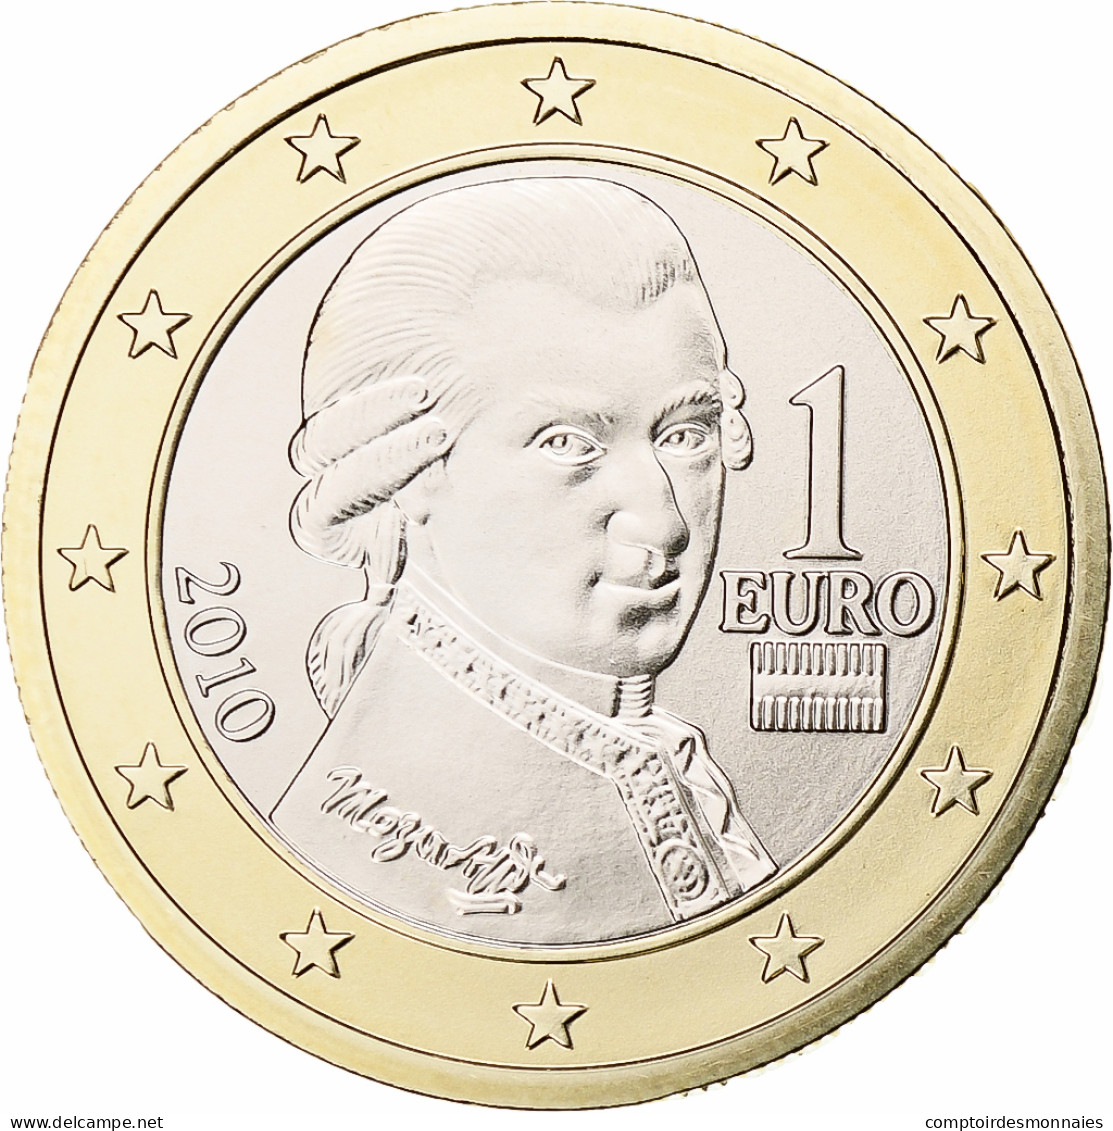 Autriche, Euro, 2010, Vienna, BU, FDC, Bimétallique, KM:3142 - Autriche